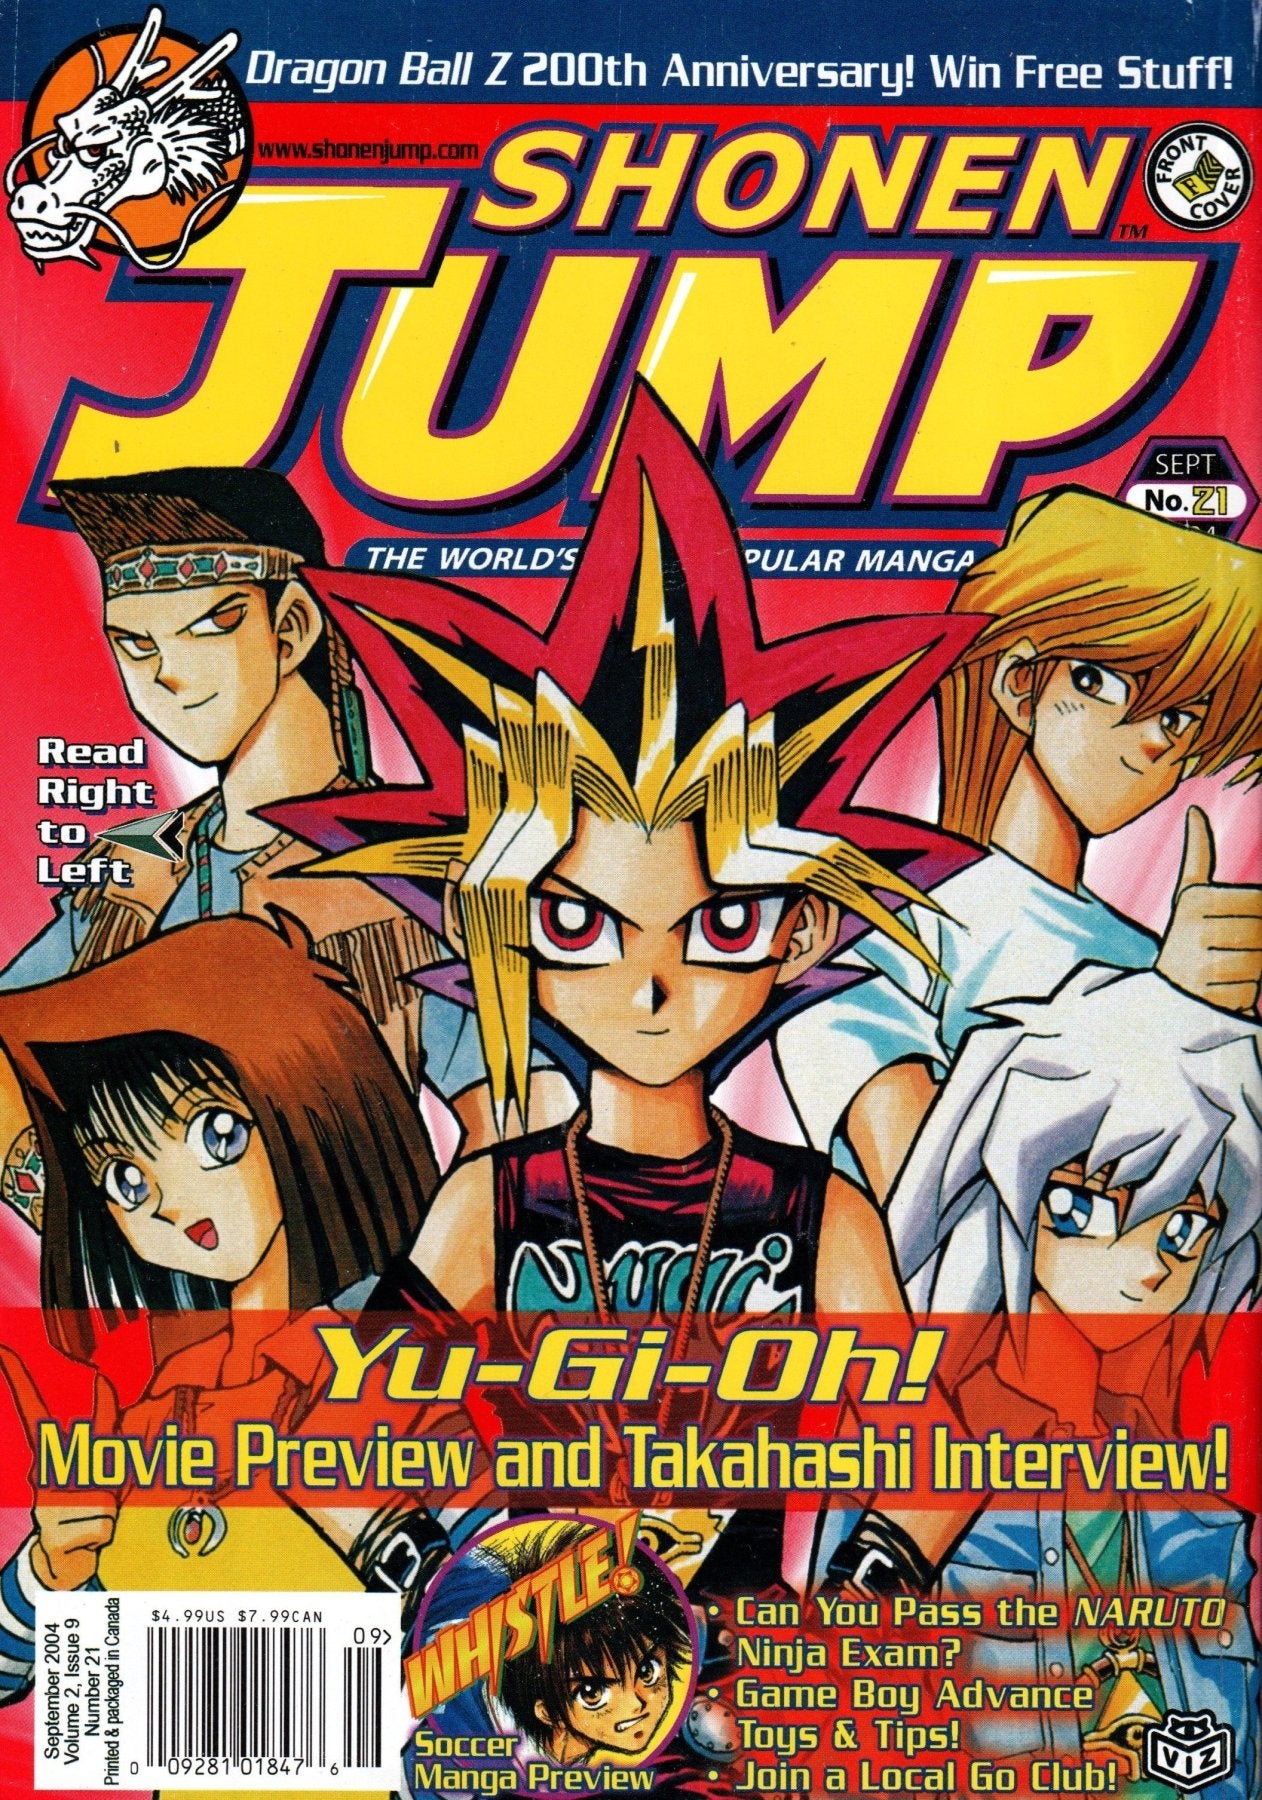 Shonen Jump: September 2004 Volume 2, Issue 9 - Magazine - Retro Island Gaming